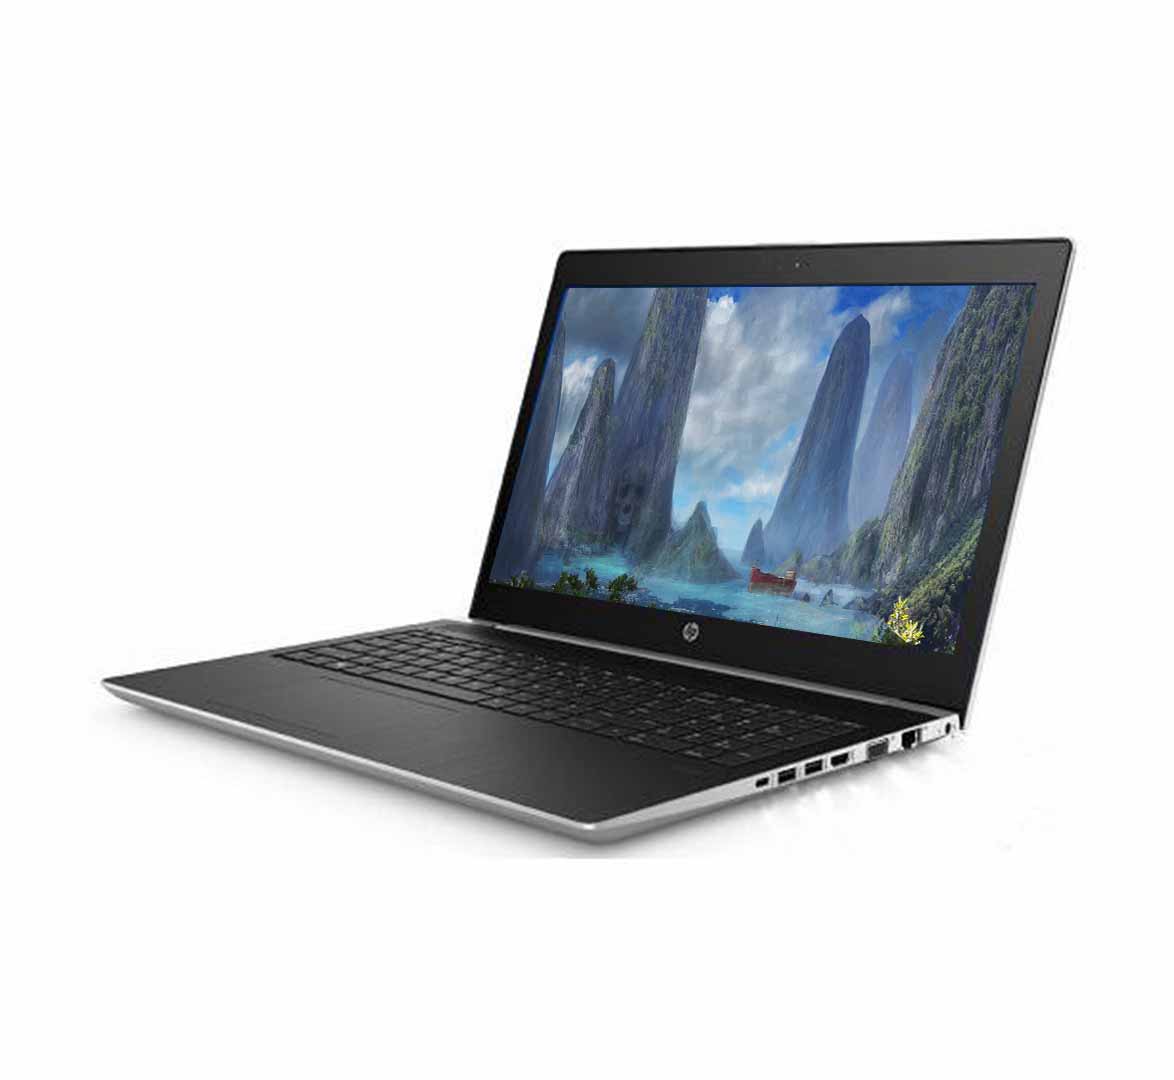 HP ProBook 450 G5 Business Laptop, Intel Core i5-8th Gen CPU, 8GB